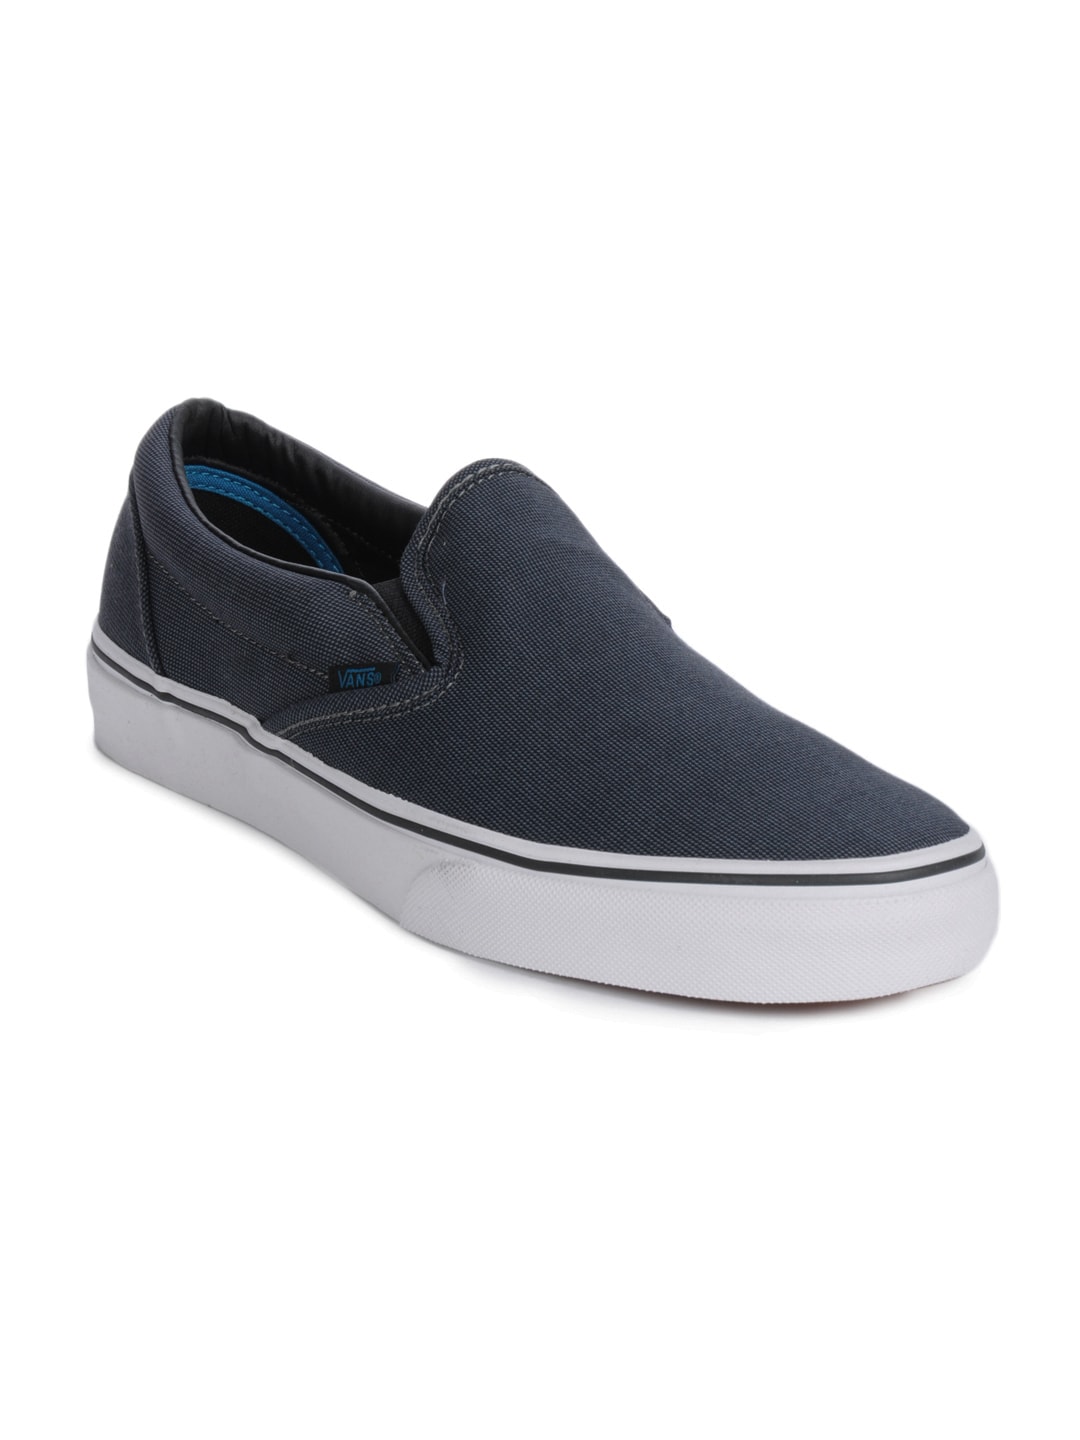 Vans Men Classic Slip-On Navy Blue Shoes